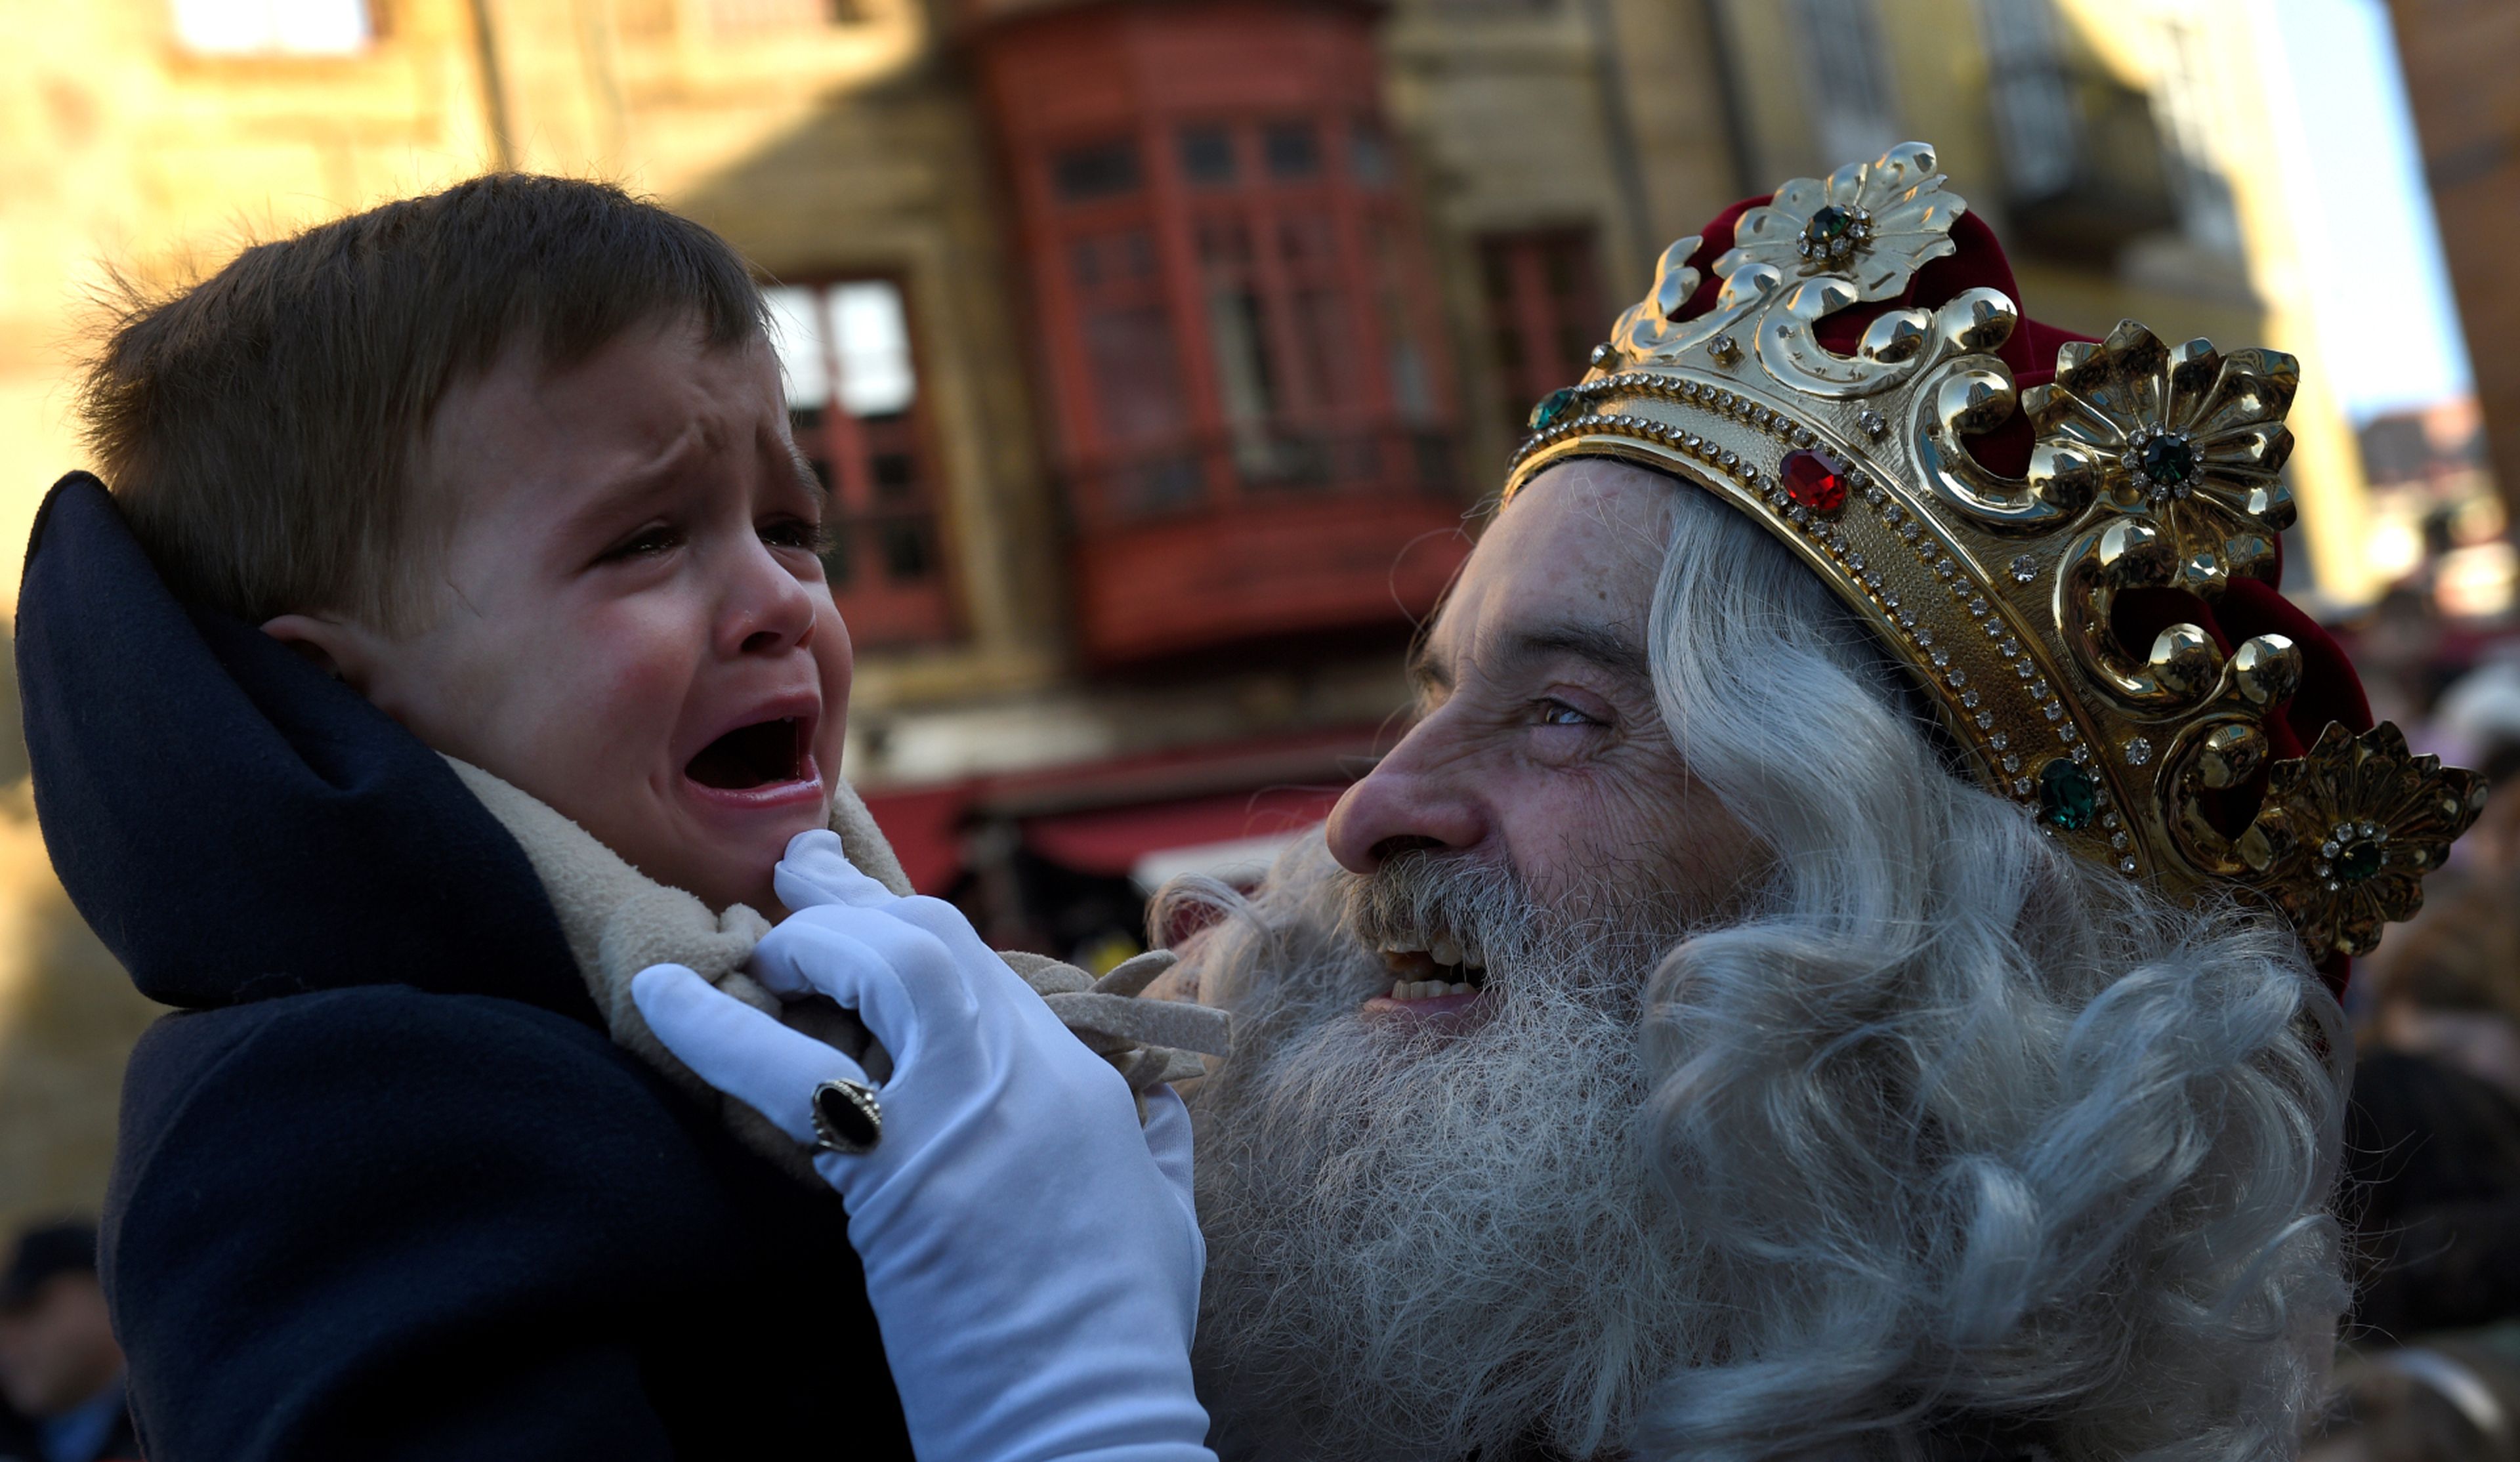 Un niño llora en brazos de un rey mago durante la cabalgata navideña de Gijón